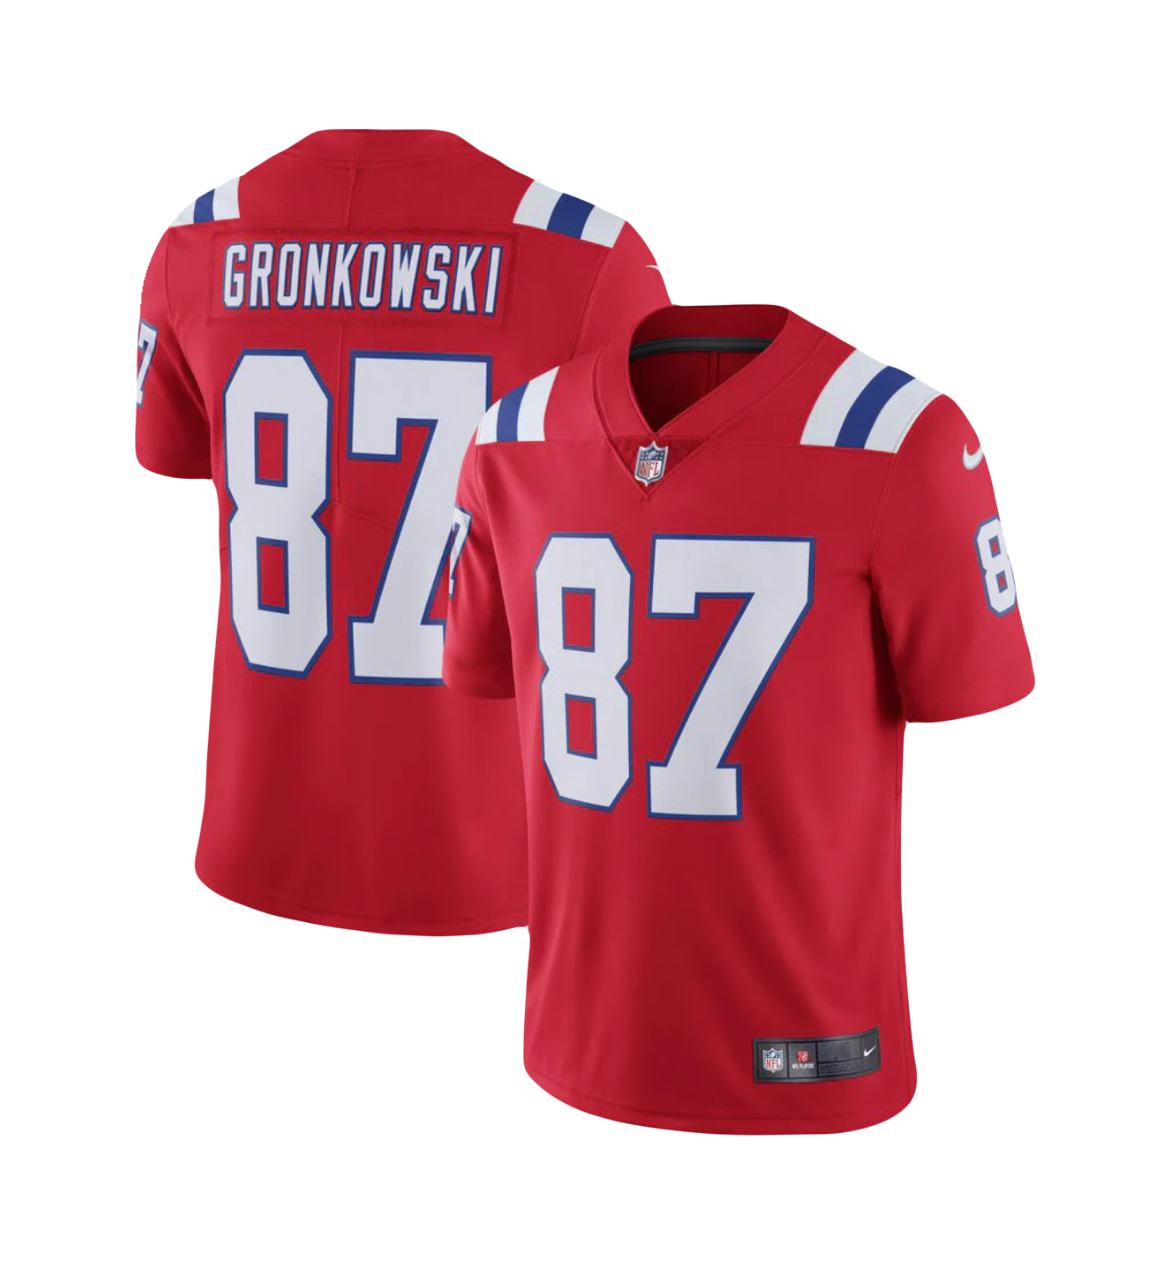 Rob Gronkowski New England Patriots Red Throwback NFL Vapor Jersey